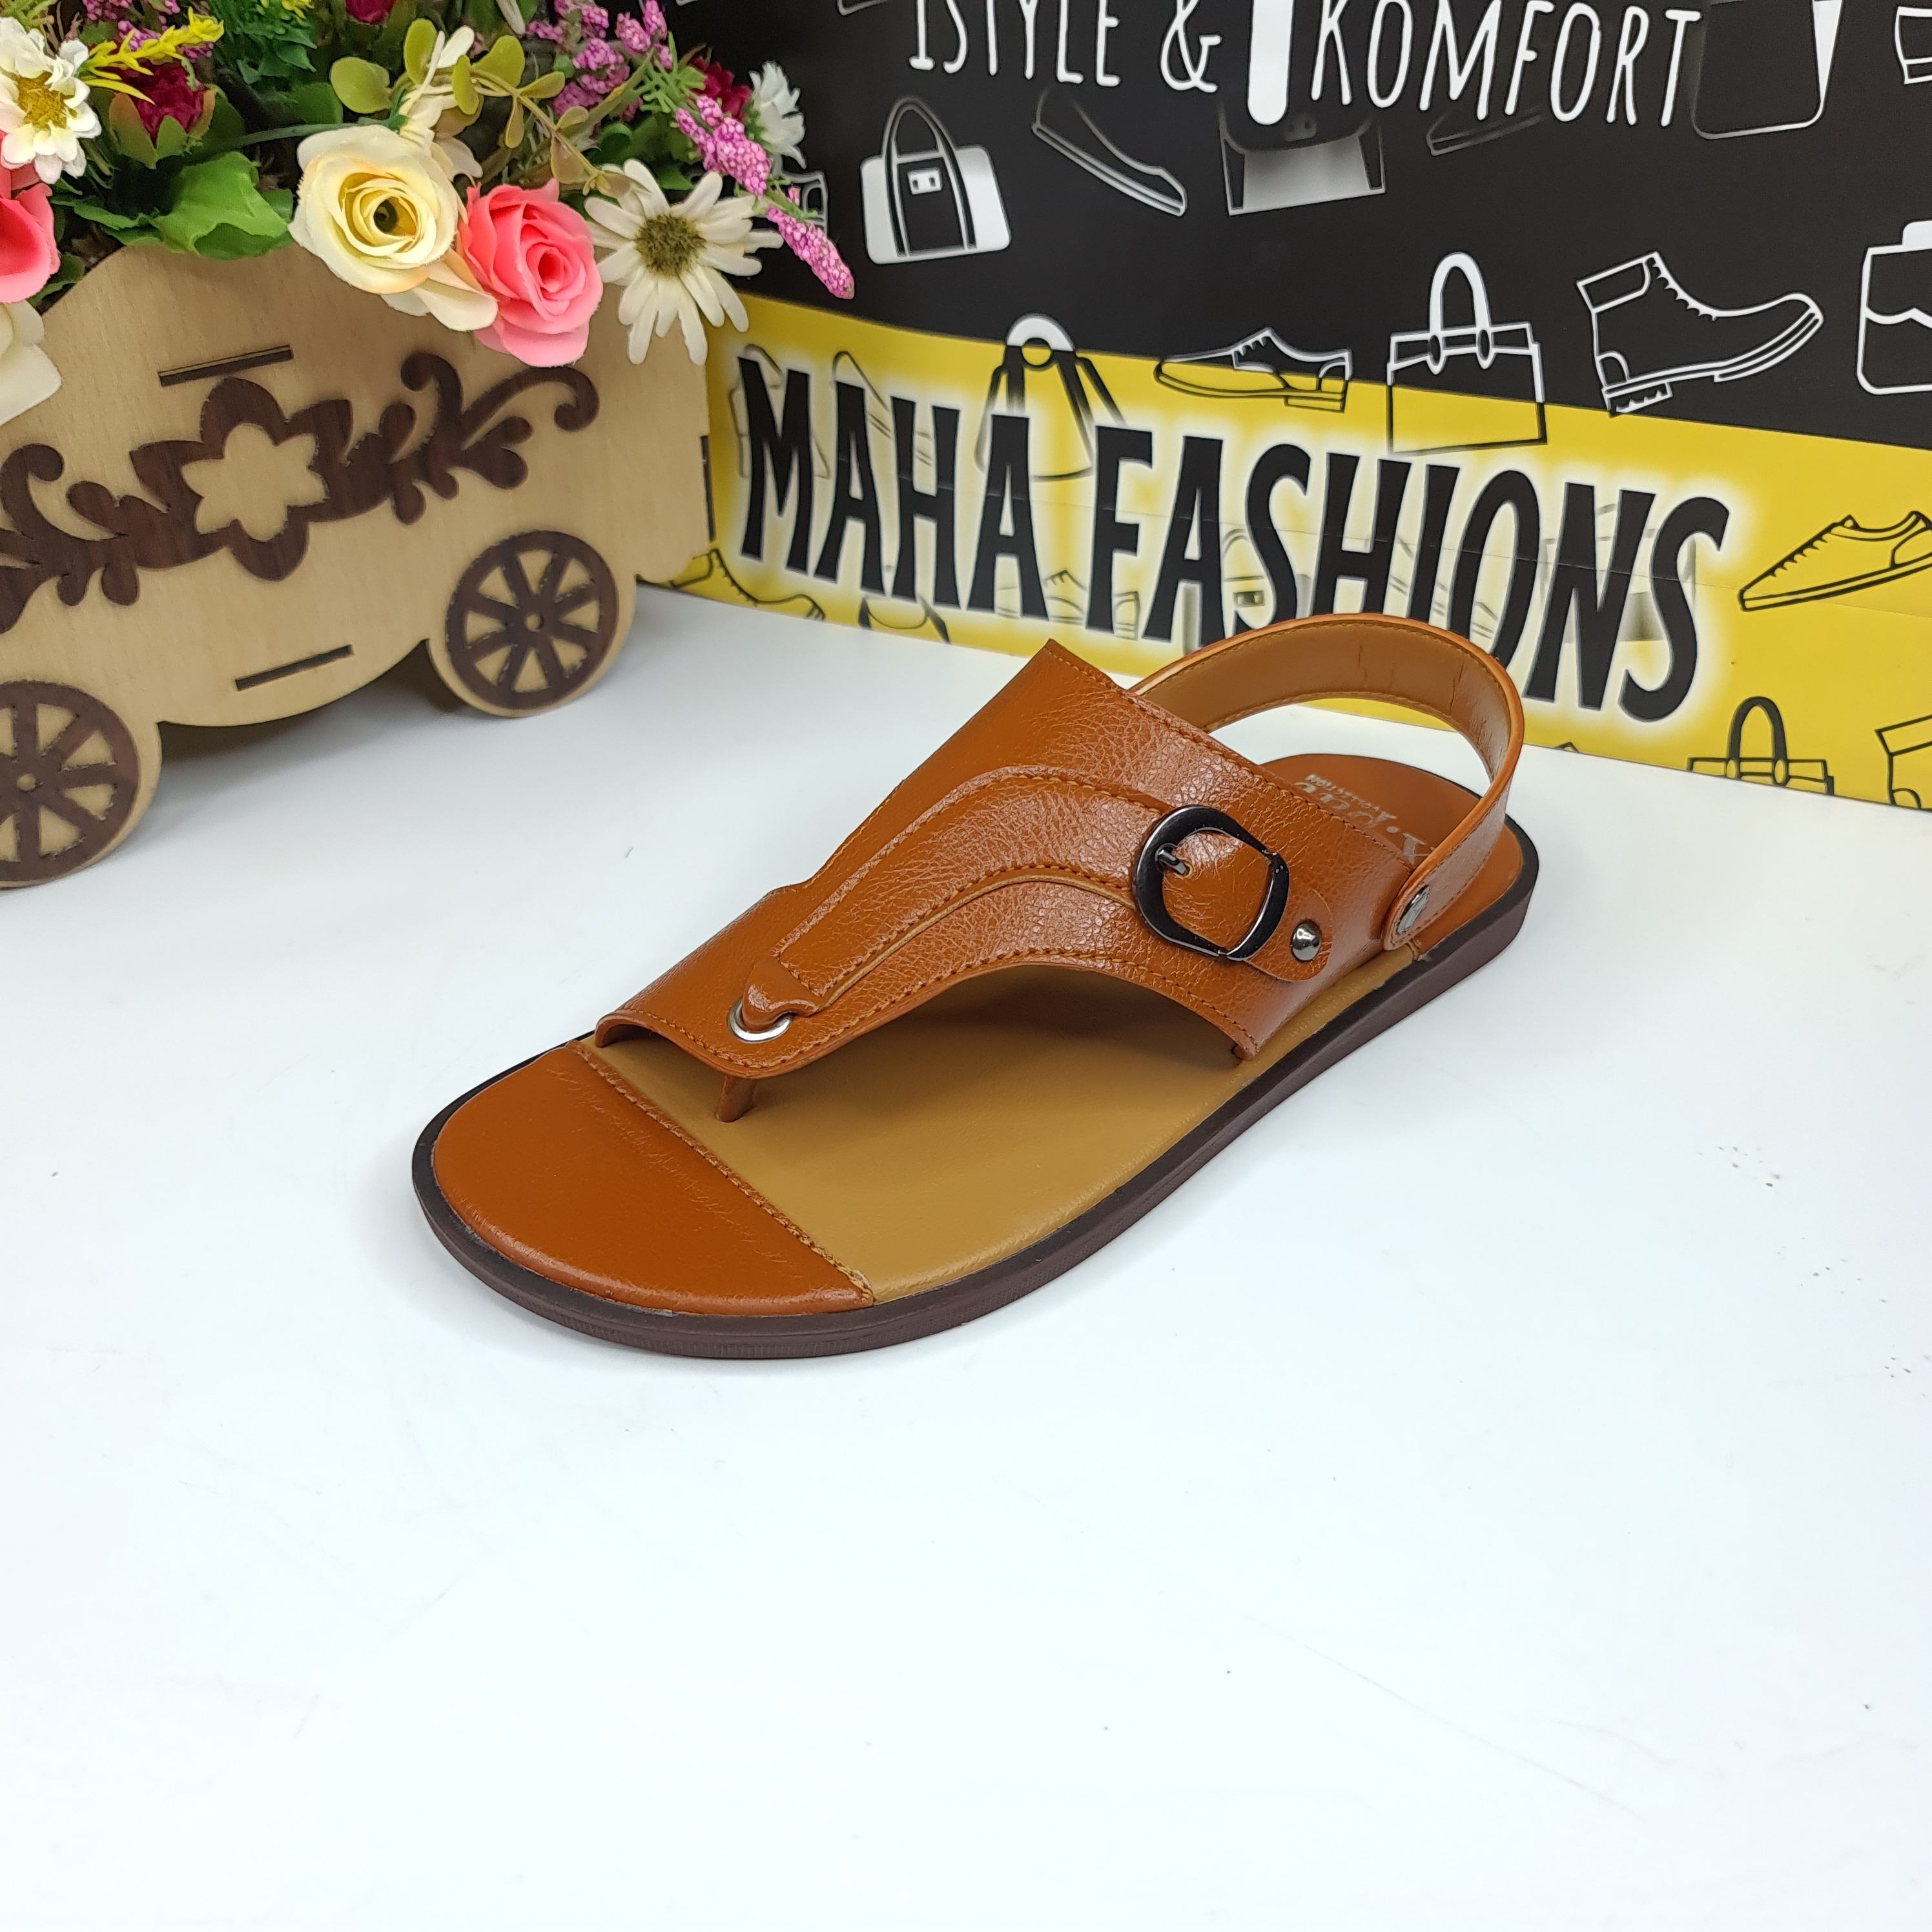 Mustard Stitch Pattern Sandals - Maha fashions -  